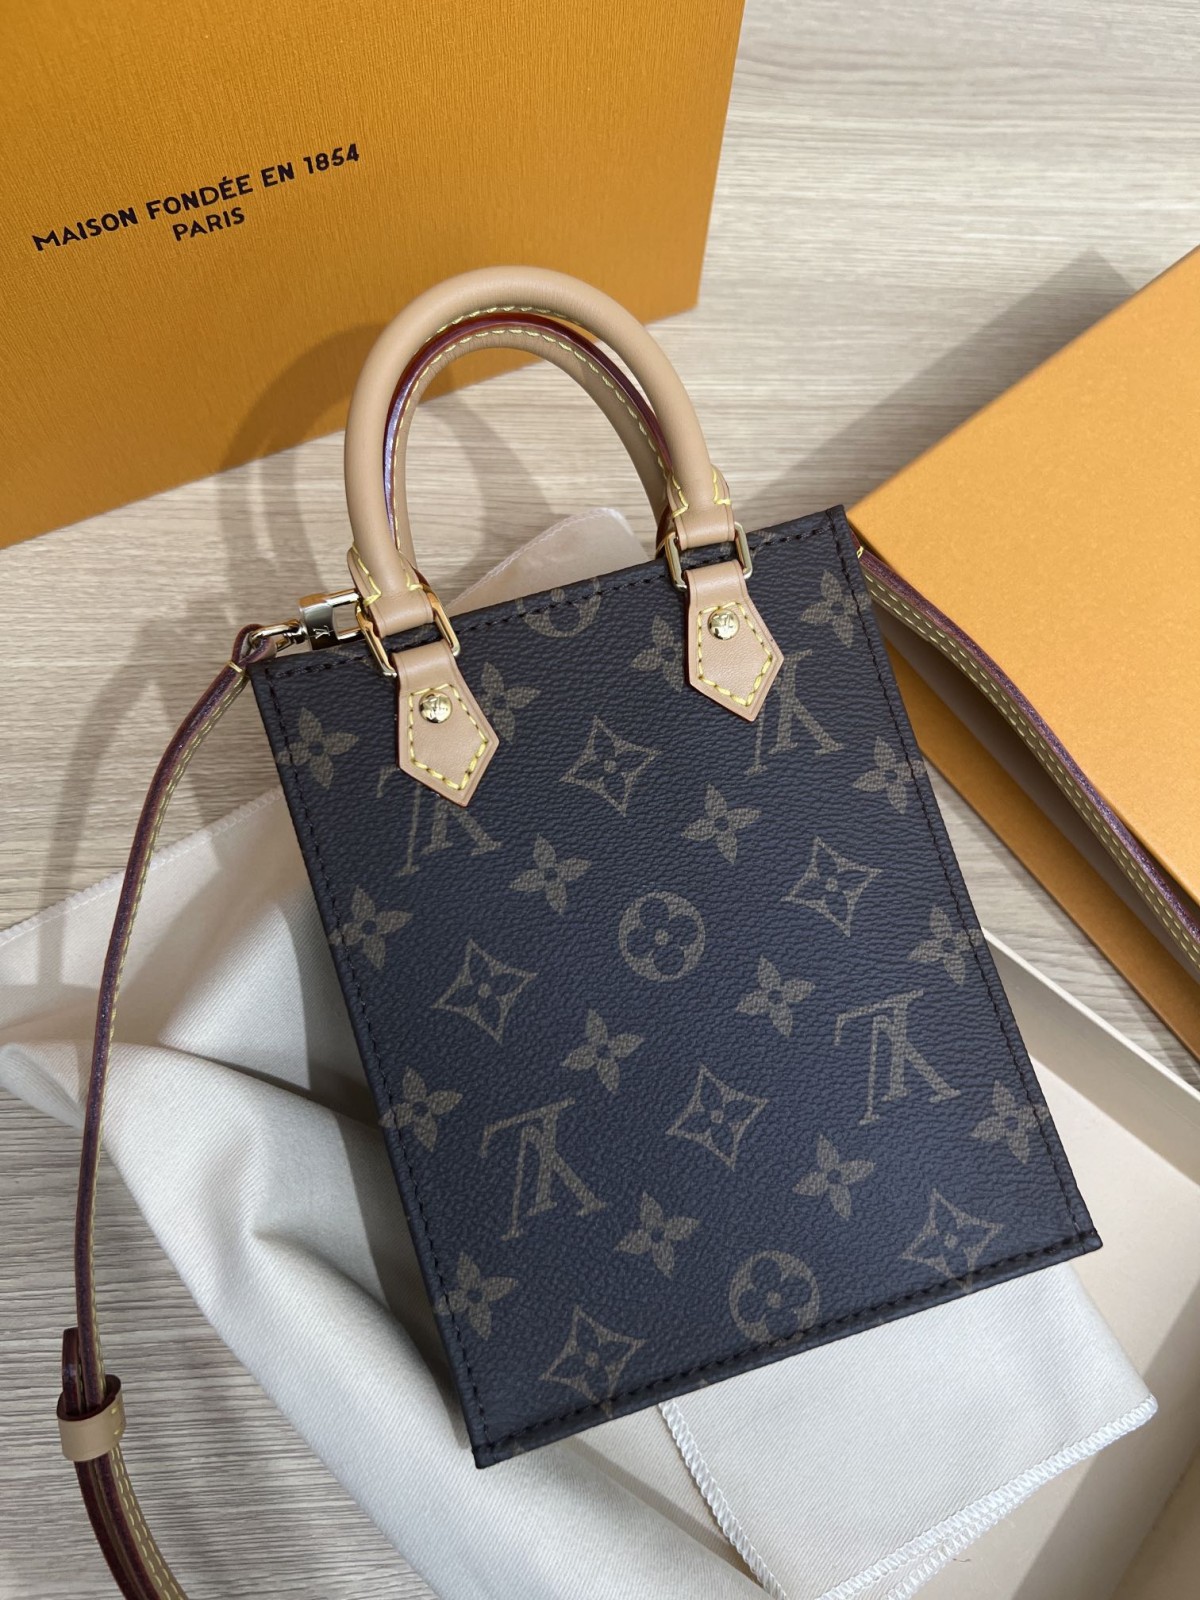 How good quality is a Shebag Louis Vuitton PETIT SAC PLAT bag（2023 udpated）-Paras laatu väärennetty Louis Vuitton laukku verkkokauppa, replika suunnittelija laukku ru